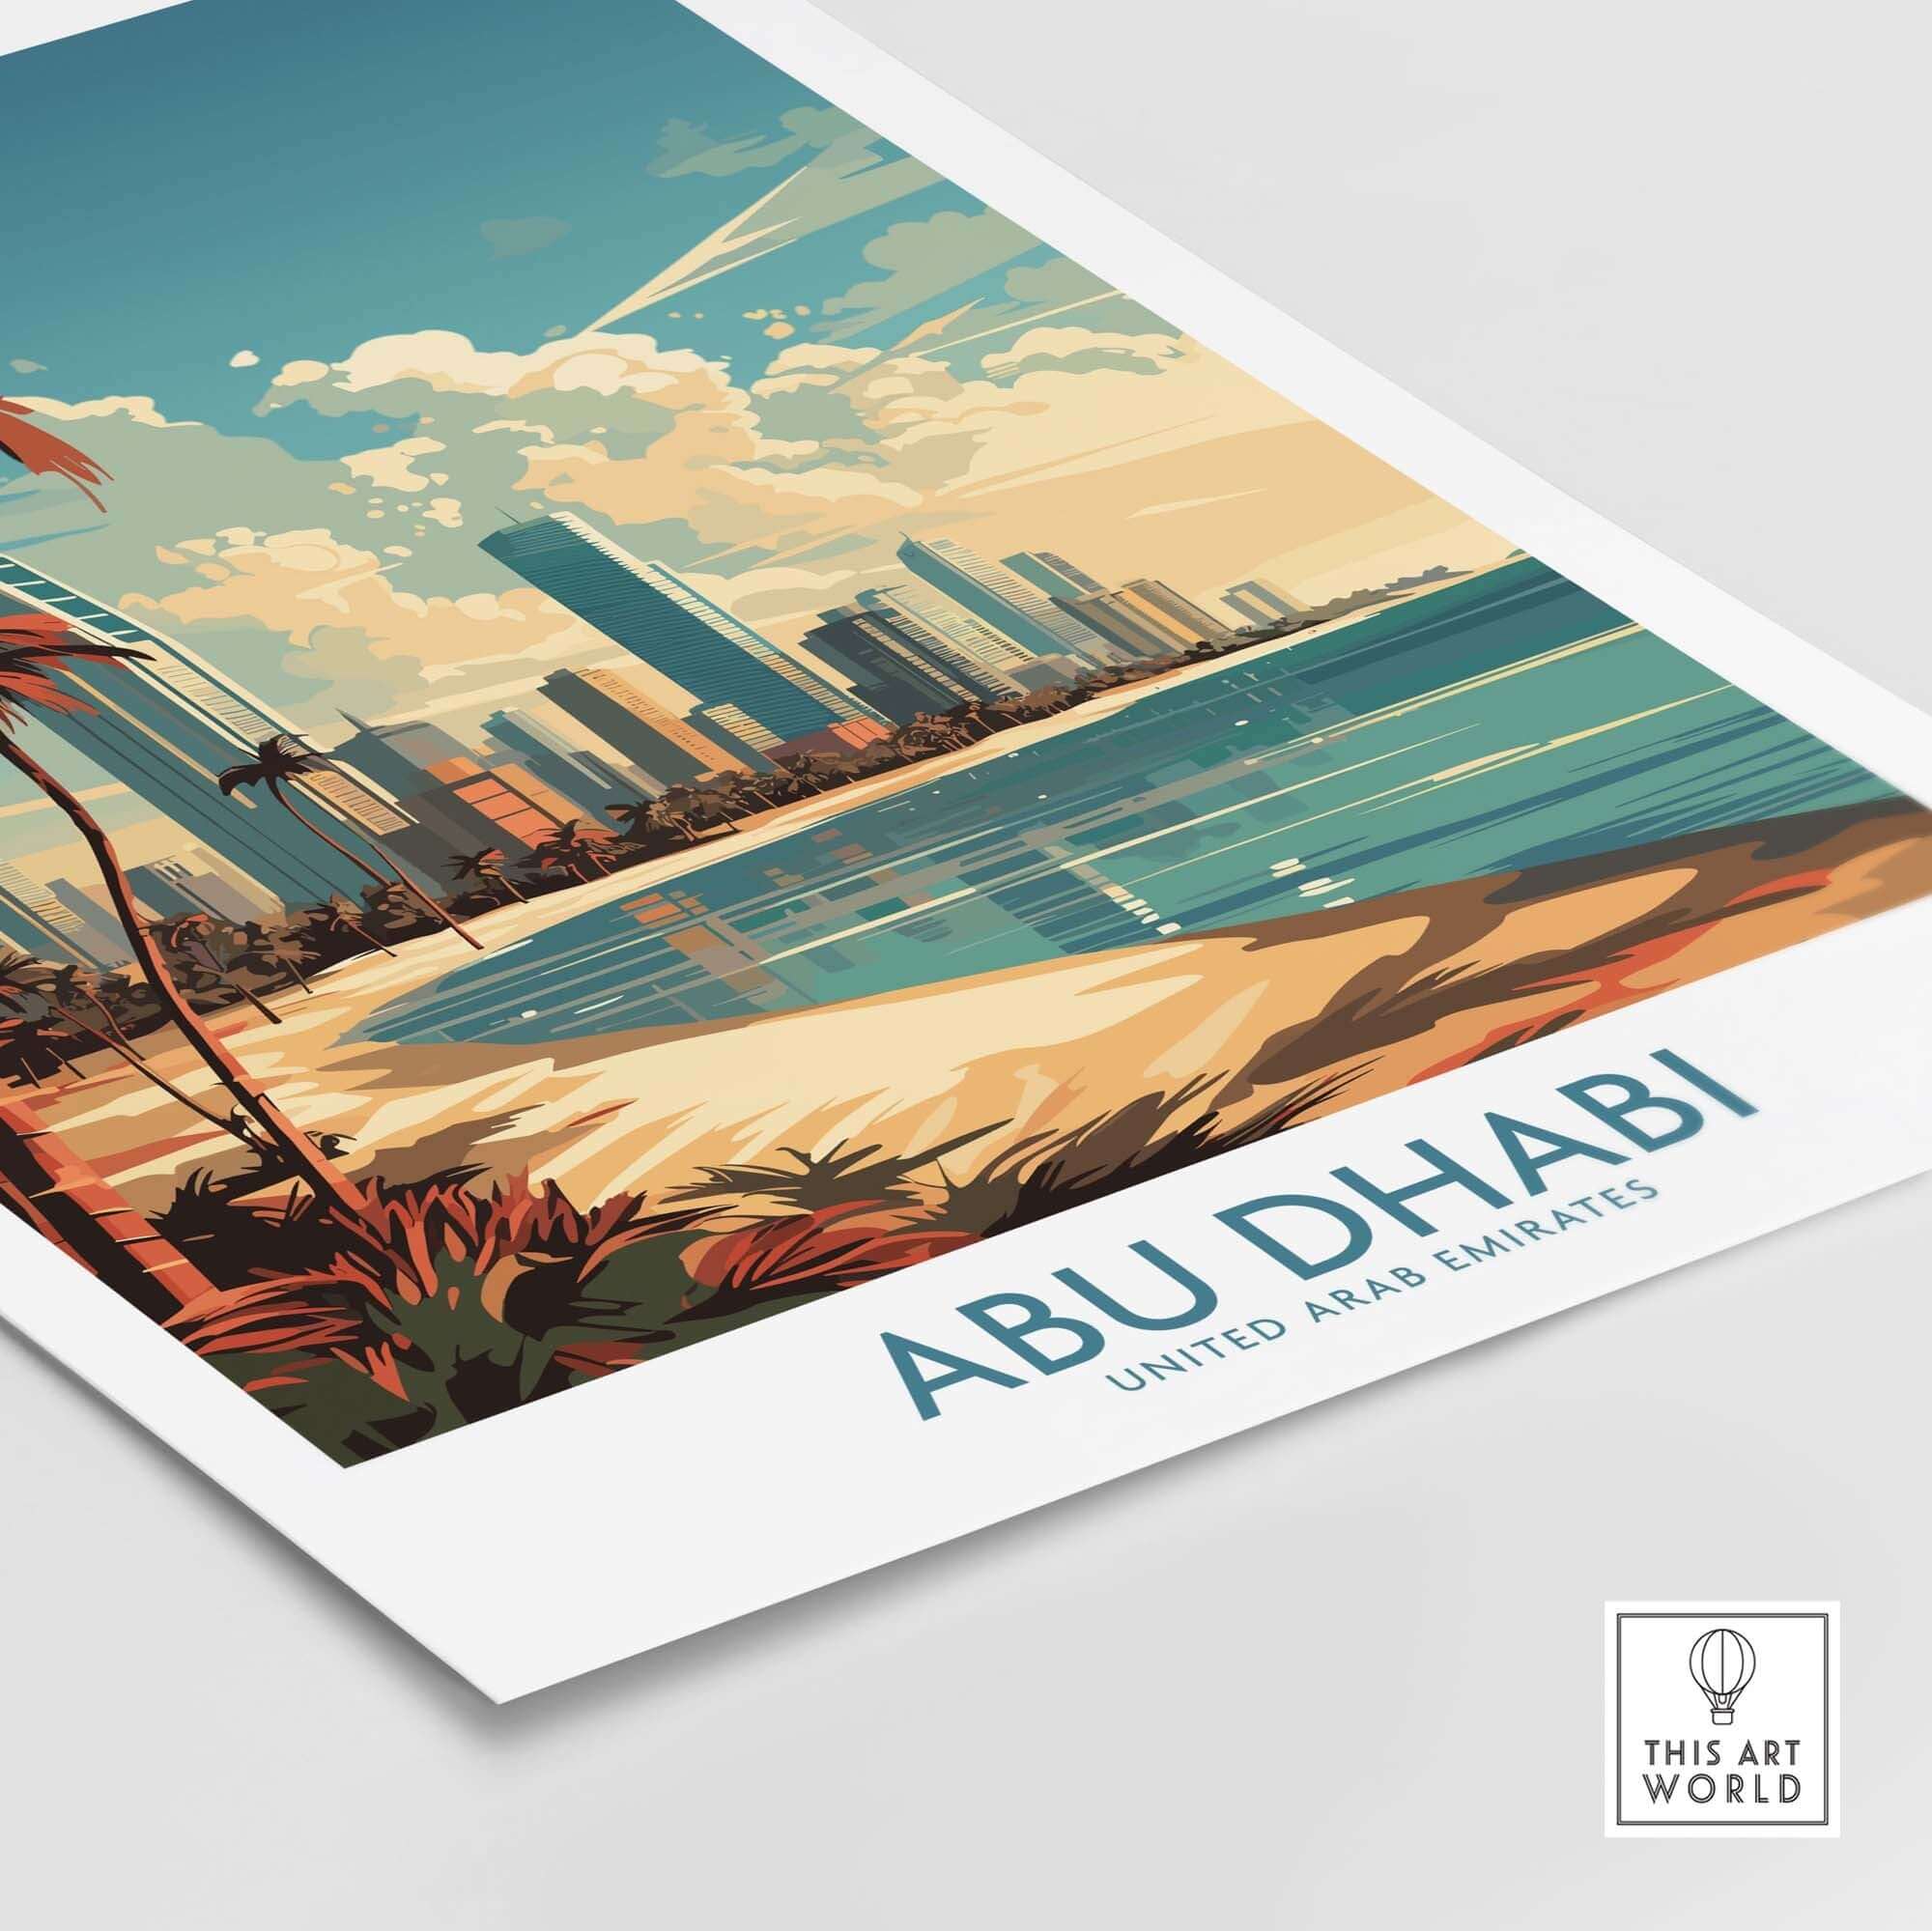 Abu Dhabi Poster